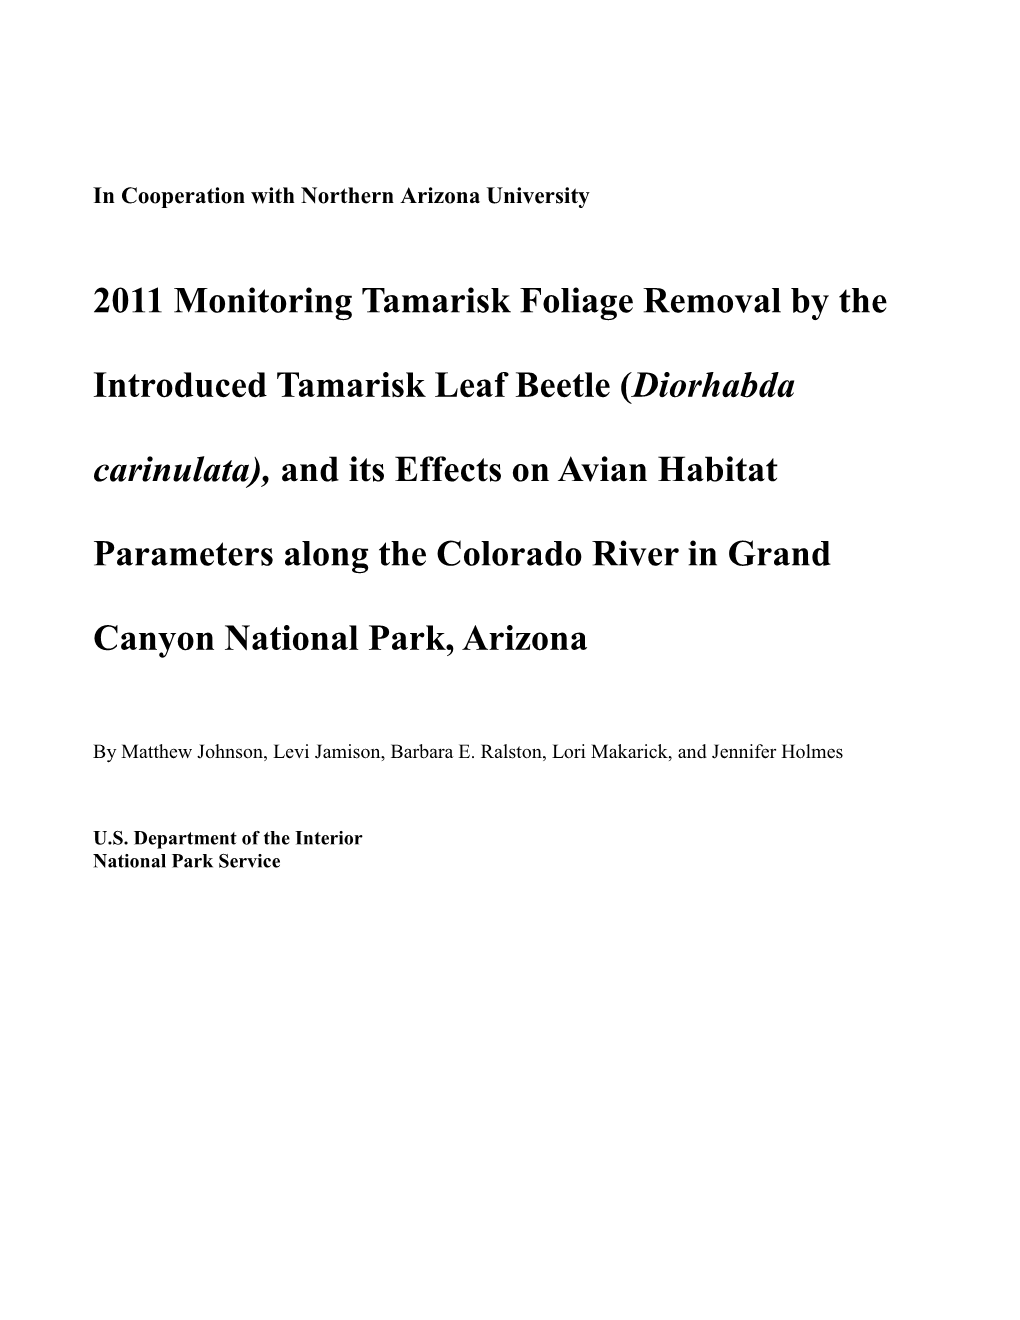 Diorhabda Carinulata), and Its Effects on Avian Habitat